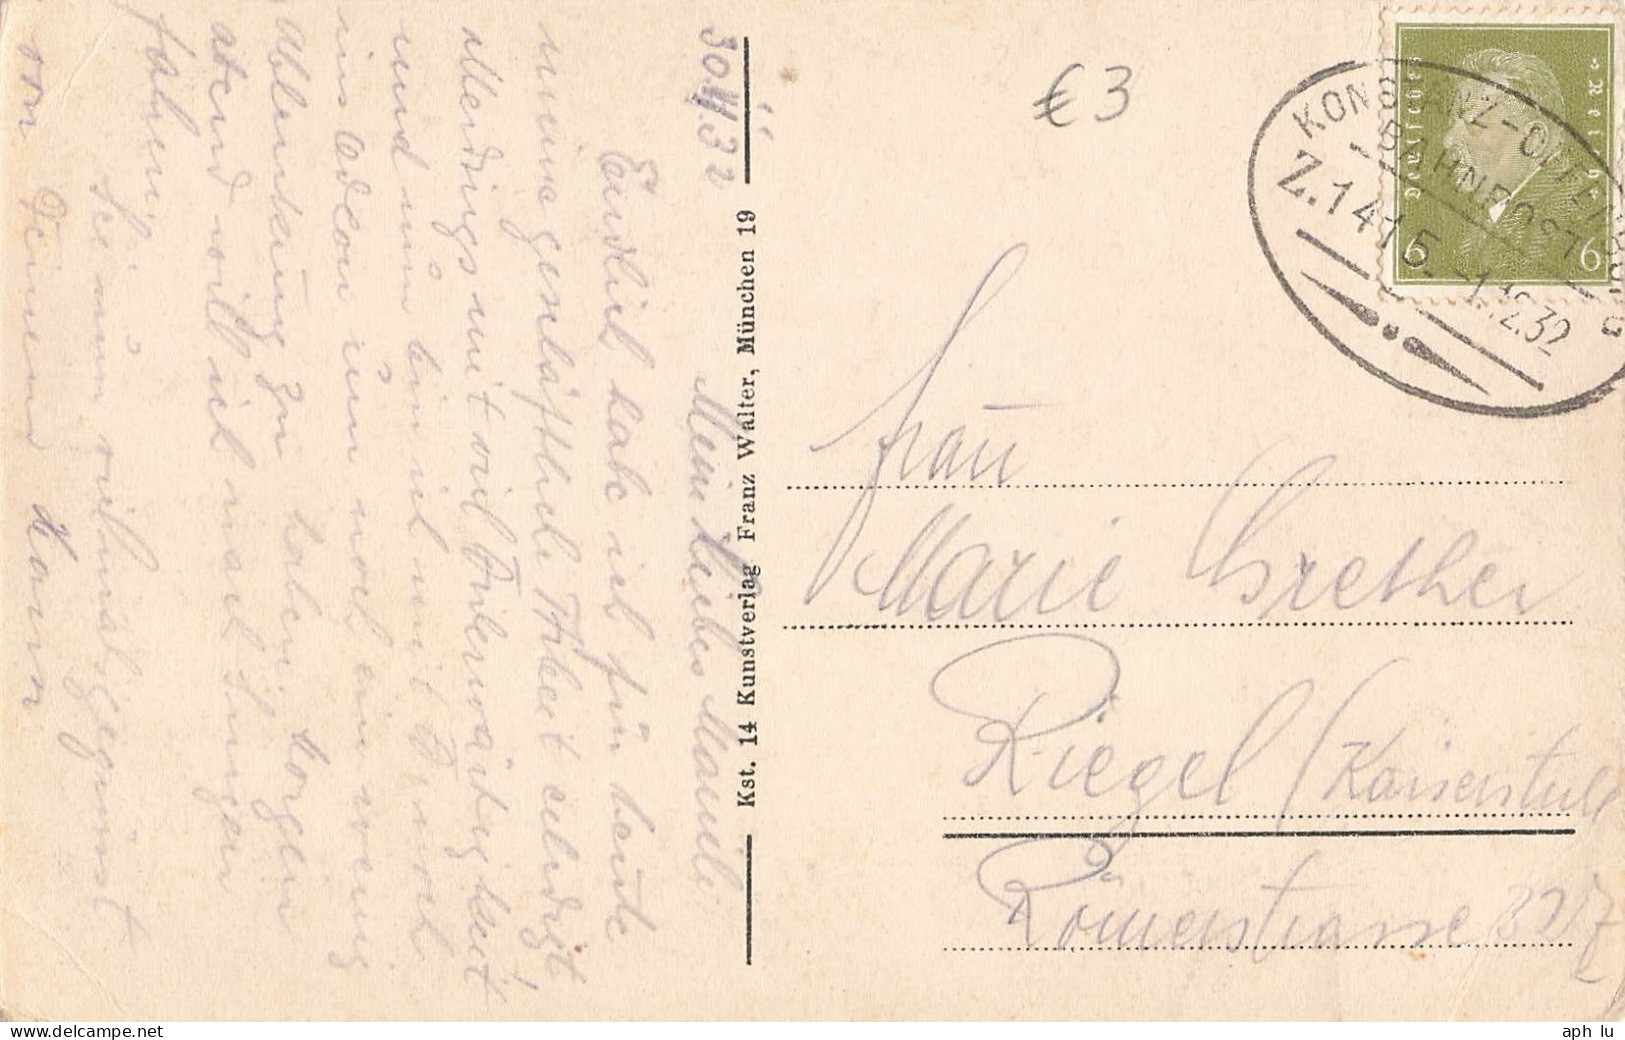 Bahnpost (Ambulant; R.P.O./T.P.O.) Konstanz-Offenburg (ZA2561) - Briefe U. Dokumente